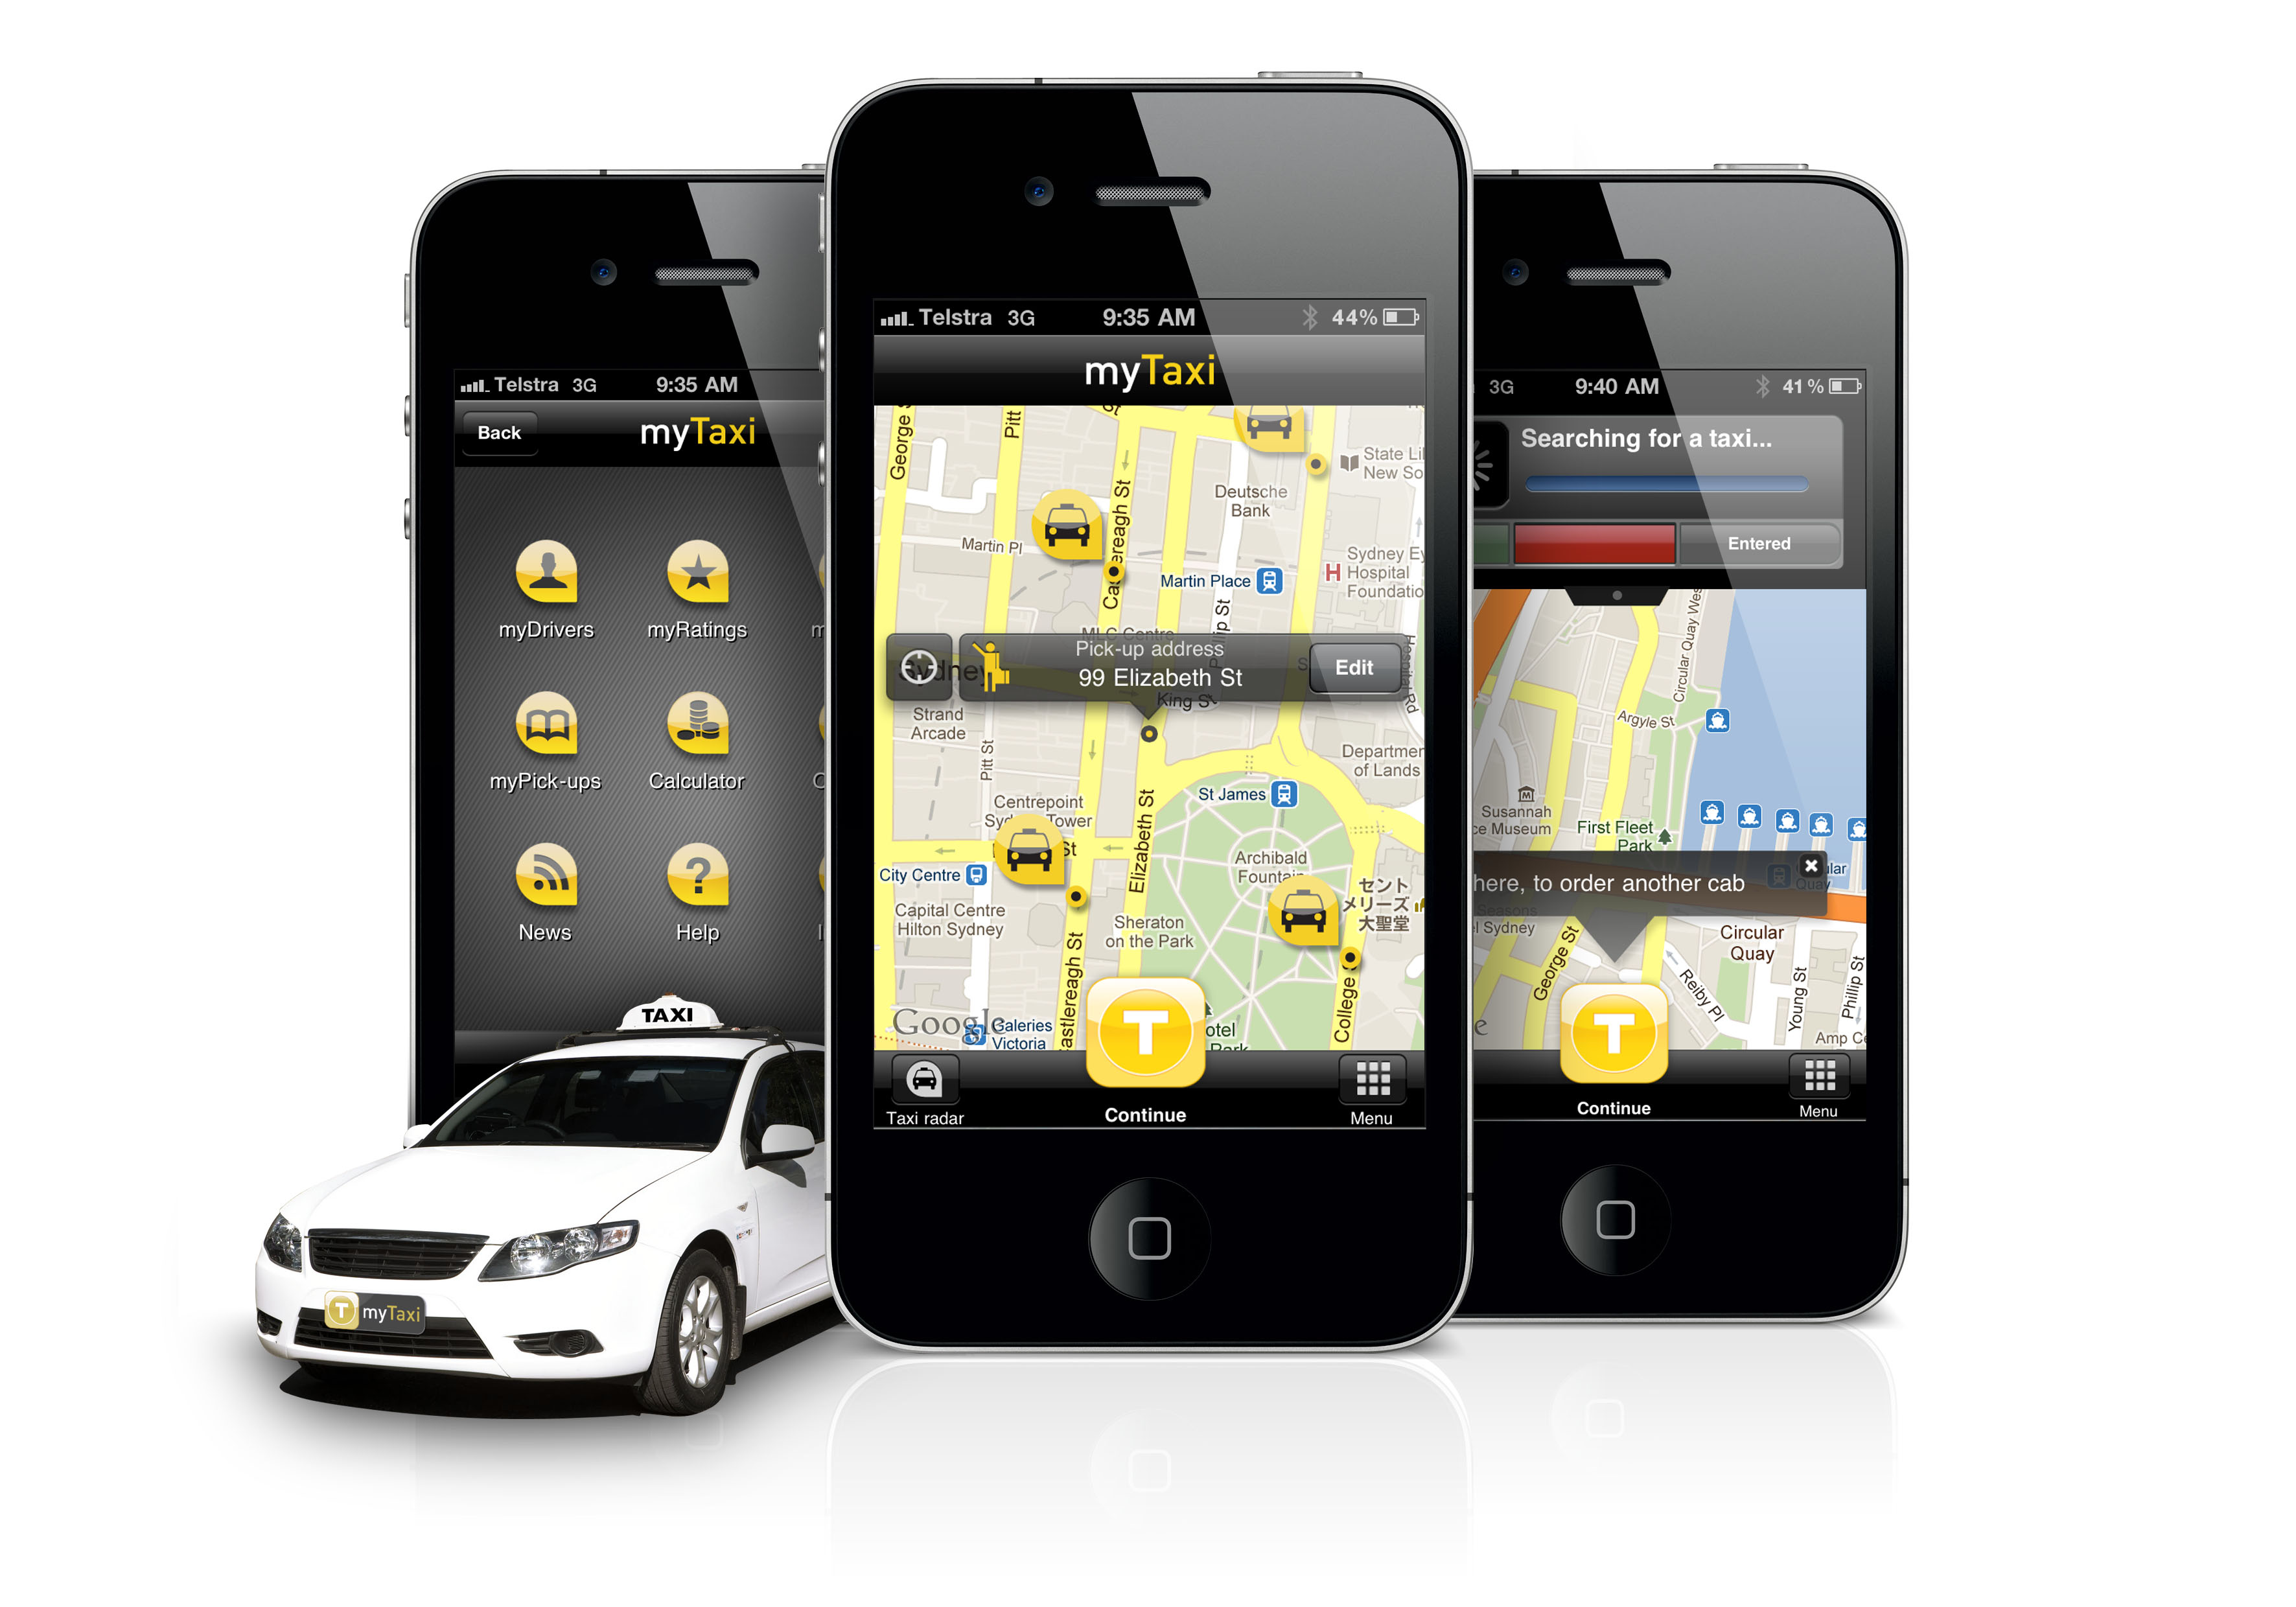 Https taxi app